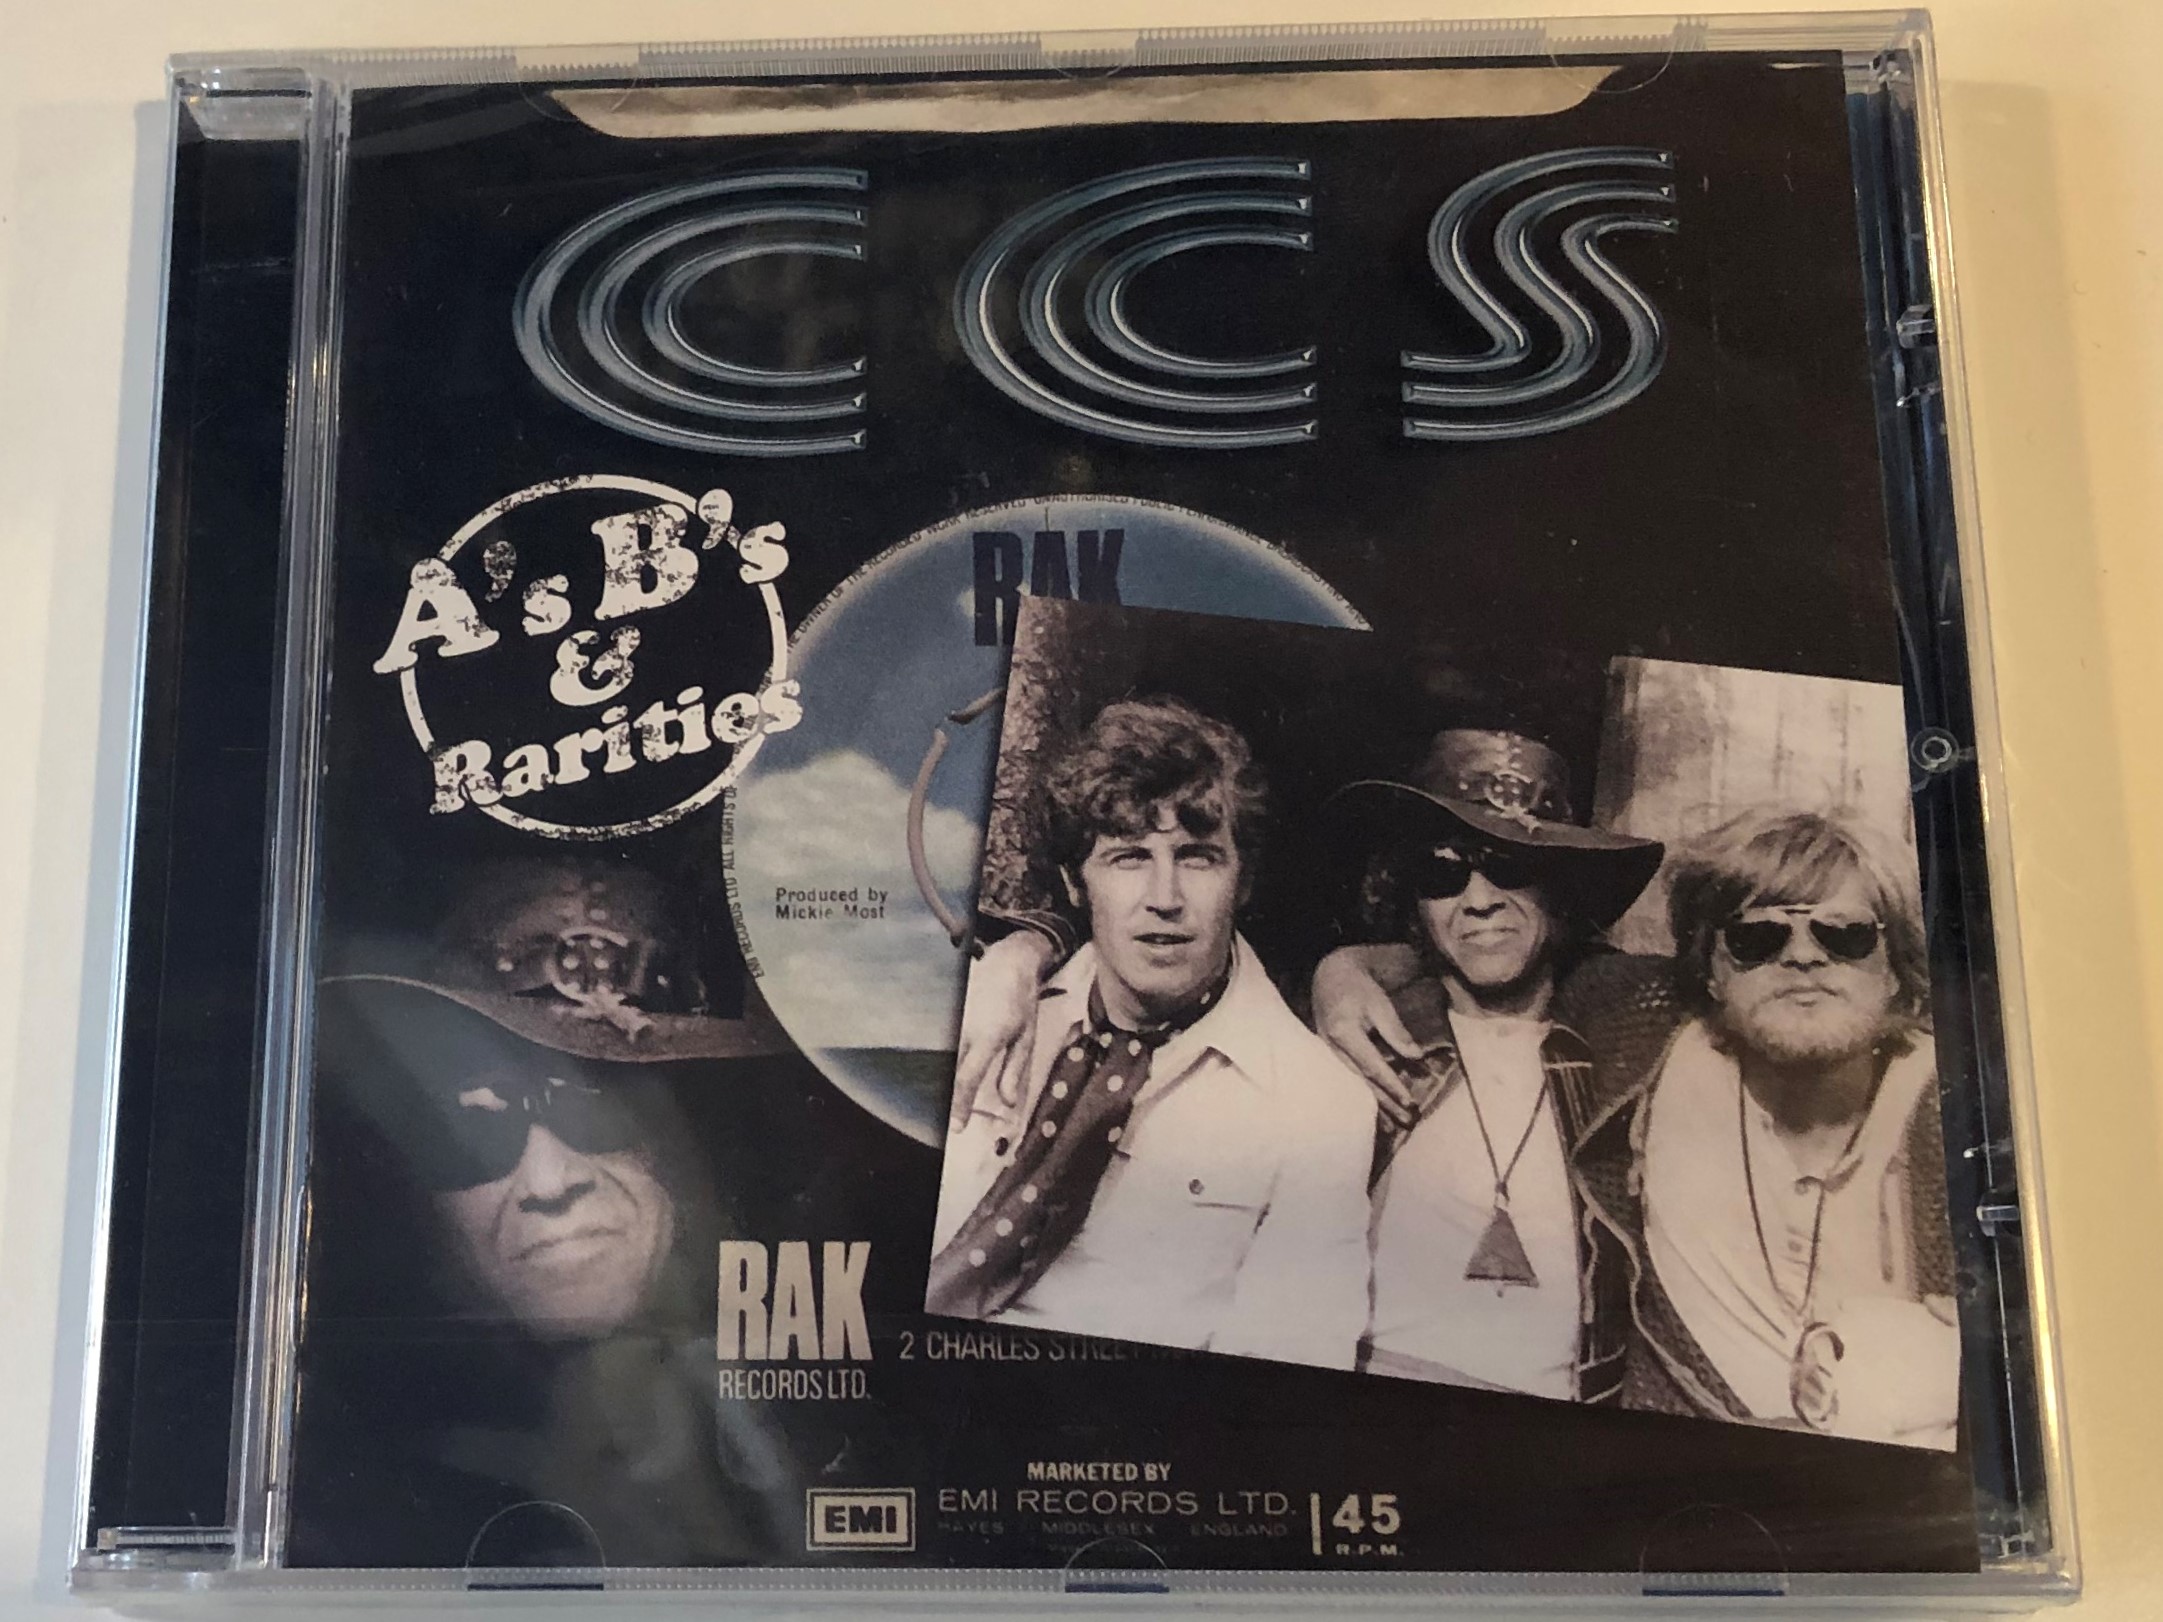 ccs-a-s-b-s-rarities-emi-gold-audio-cd-2004-724356025325-1-.jpg